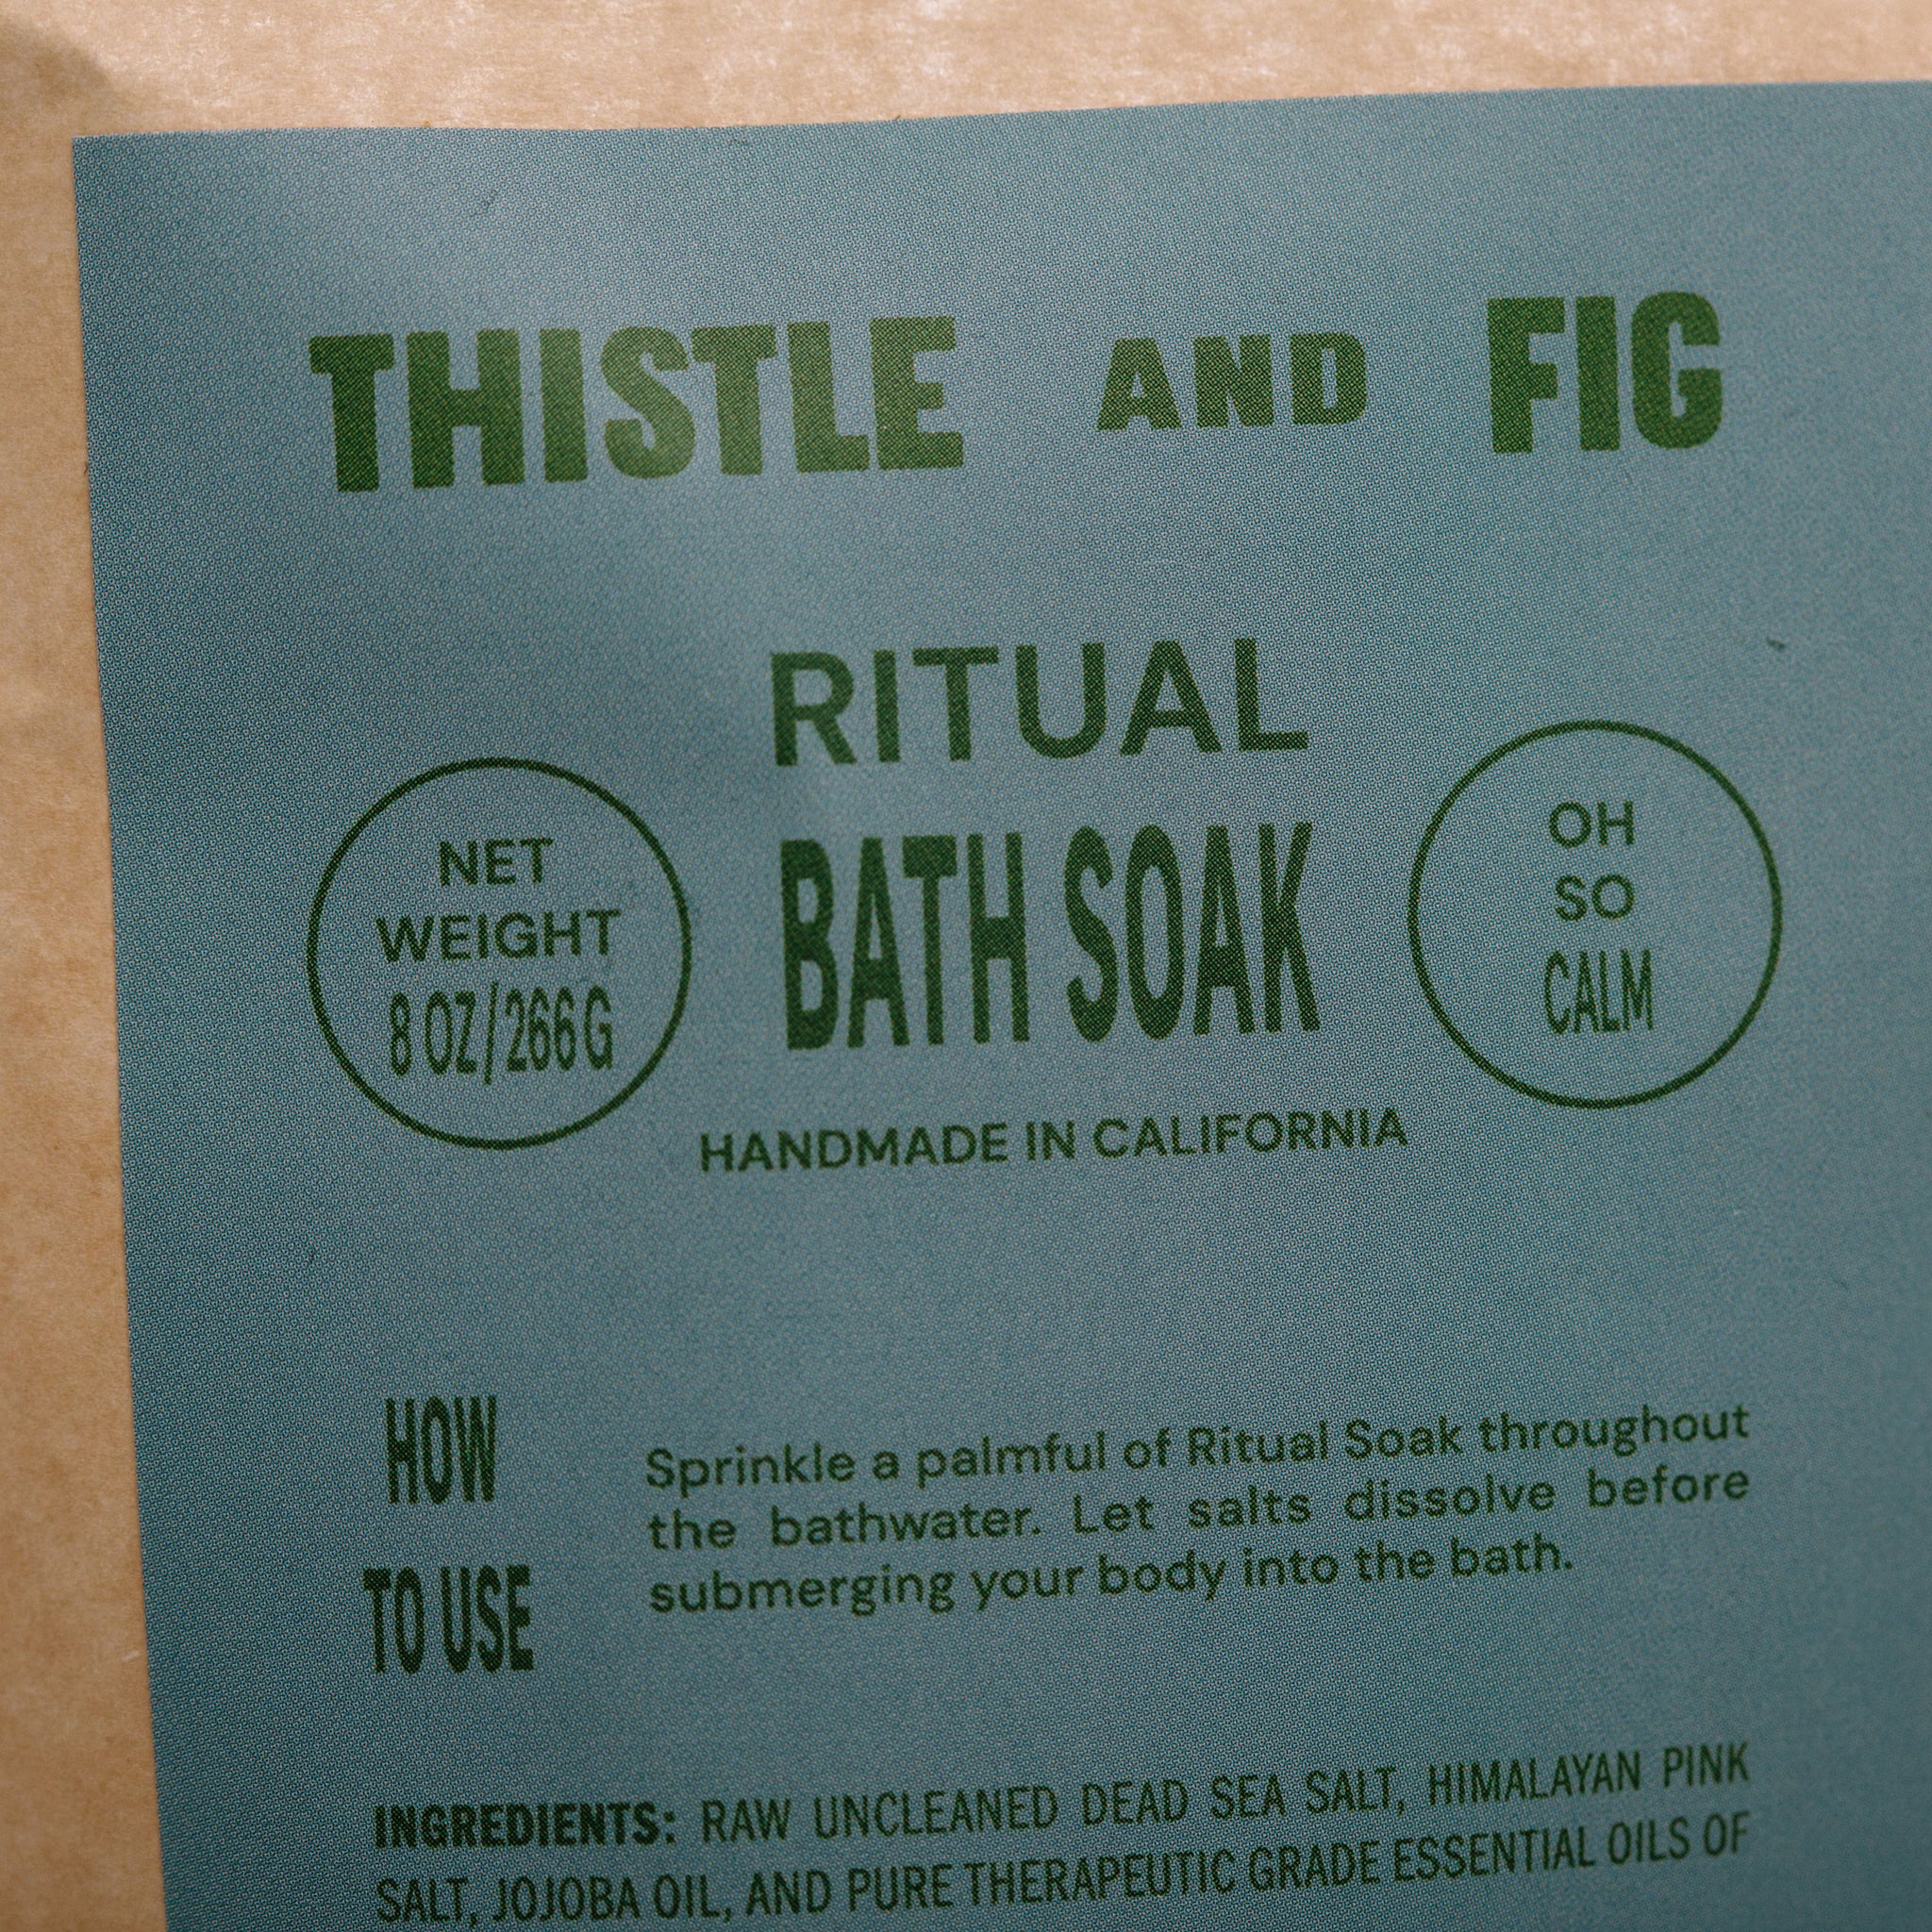 RITUAL BATH SOAK || THISTLE & FIG